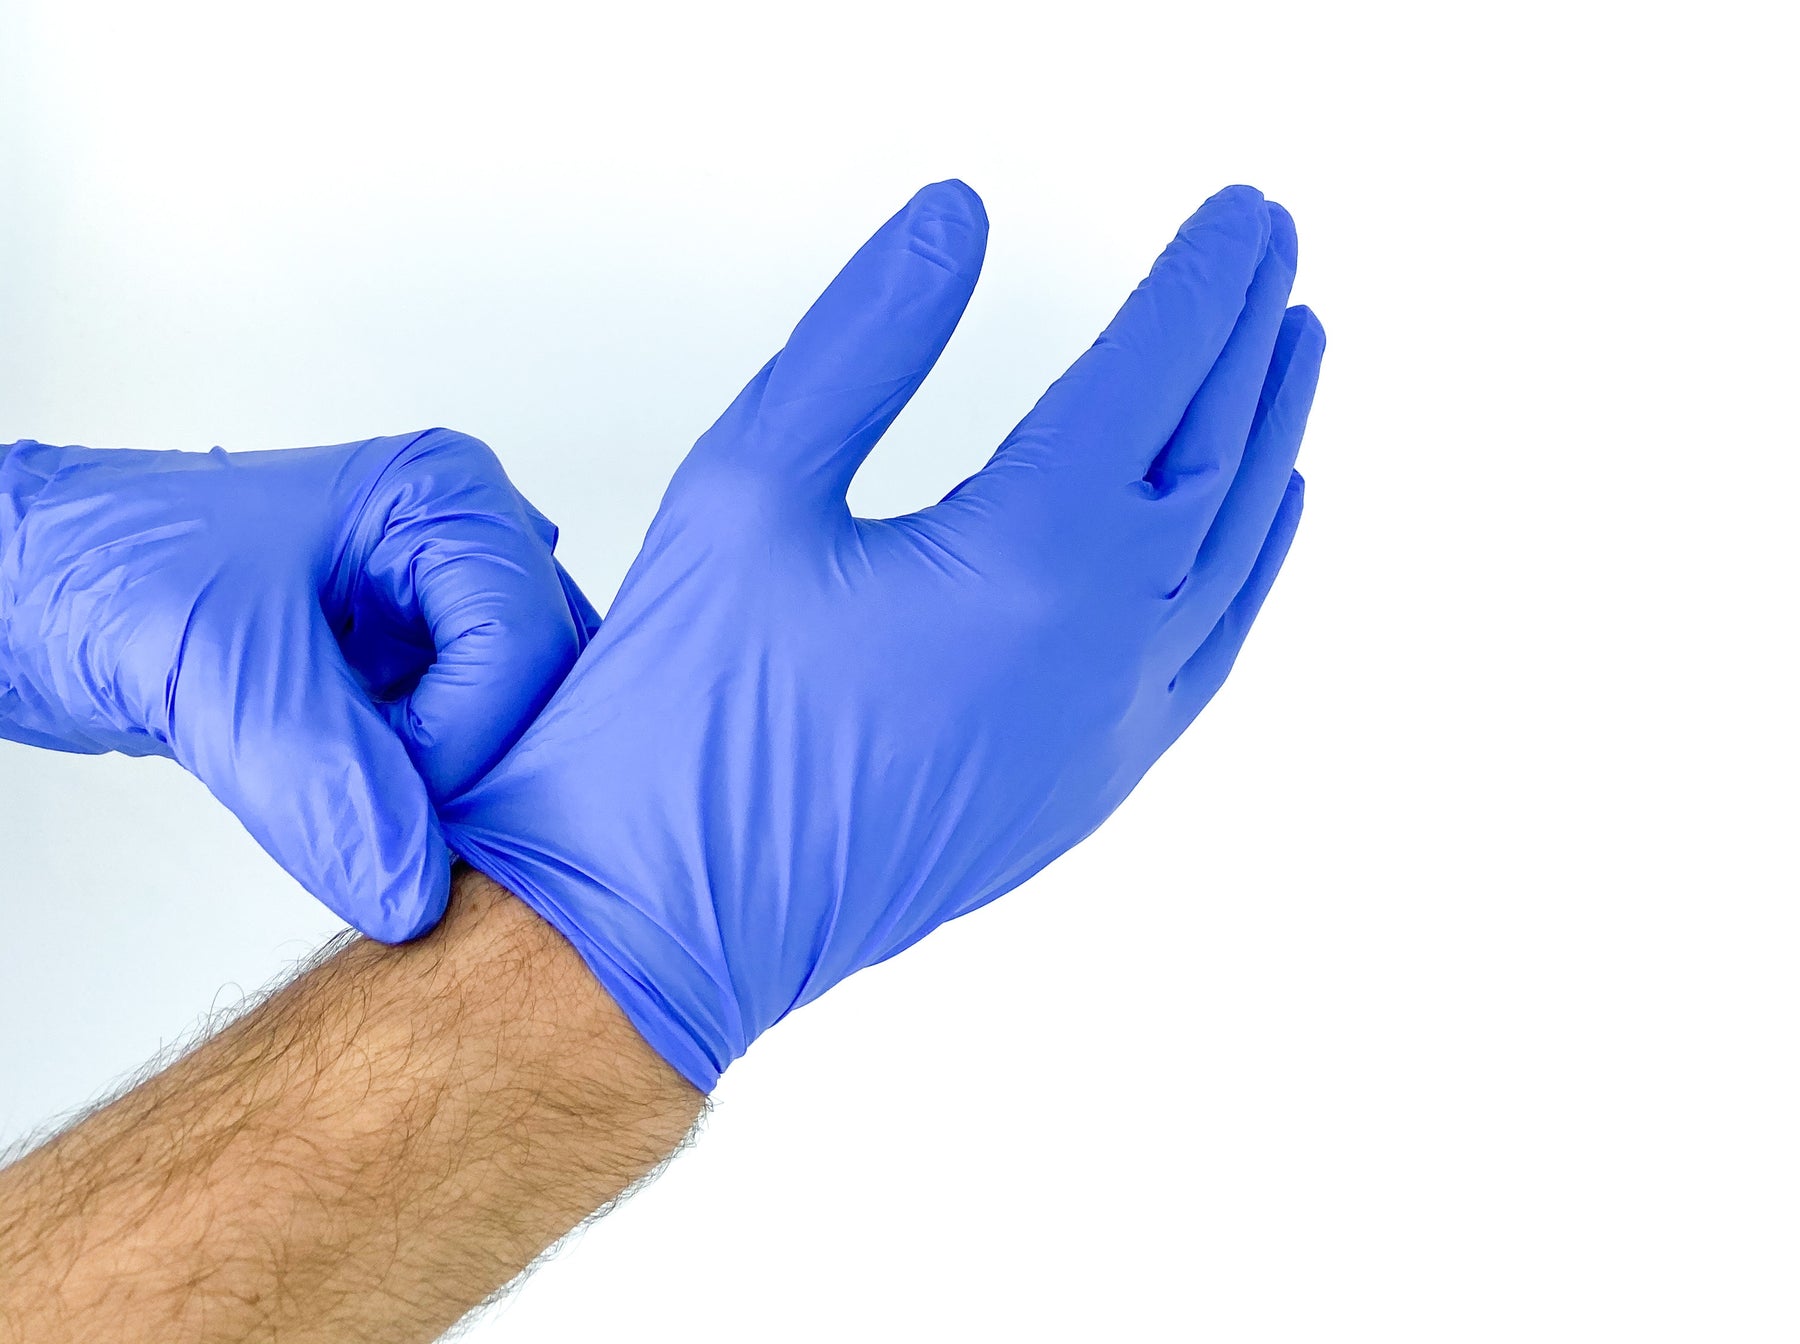 Types of Dental Gloves